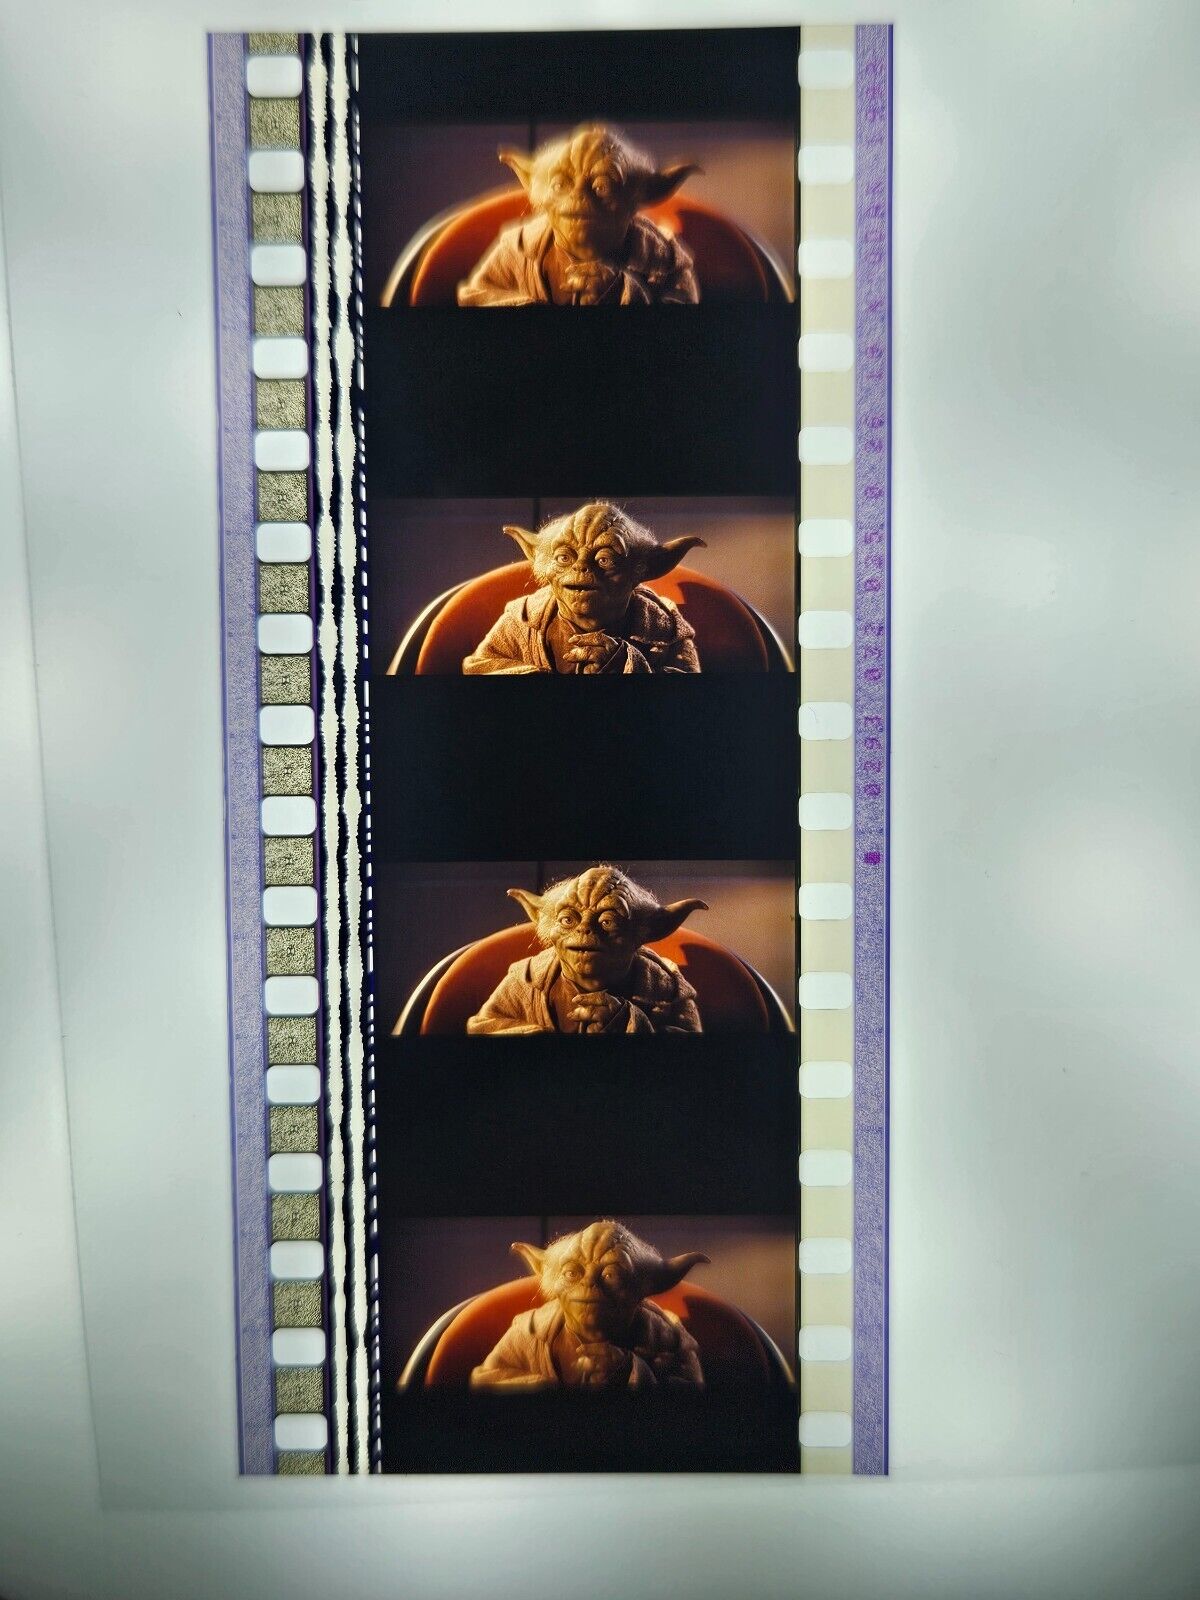 Yoda Star Wars Episode 1 Phantom Menace 35mm Original Film Cells SW2068 Star Wars 35mm Film Cell - Hobby Gems